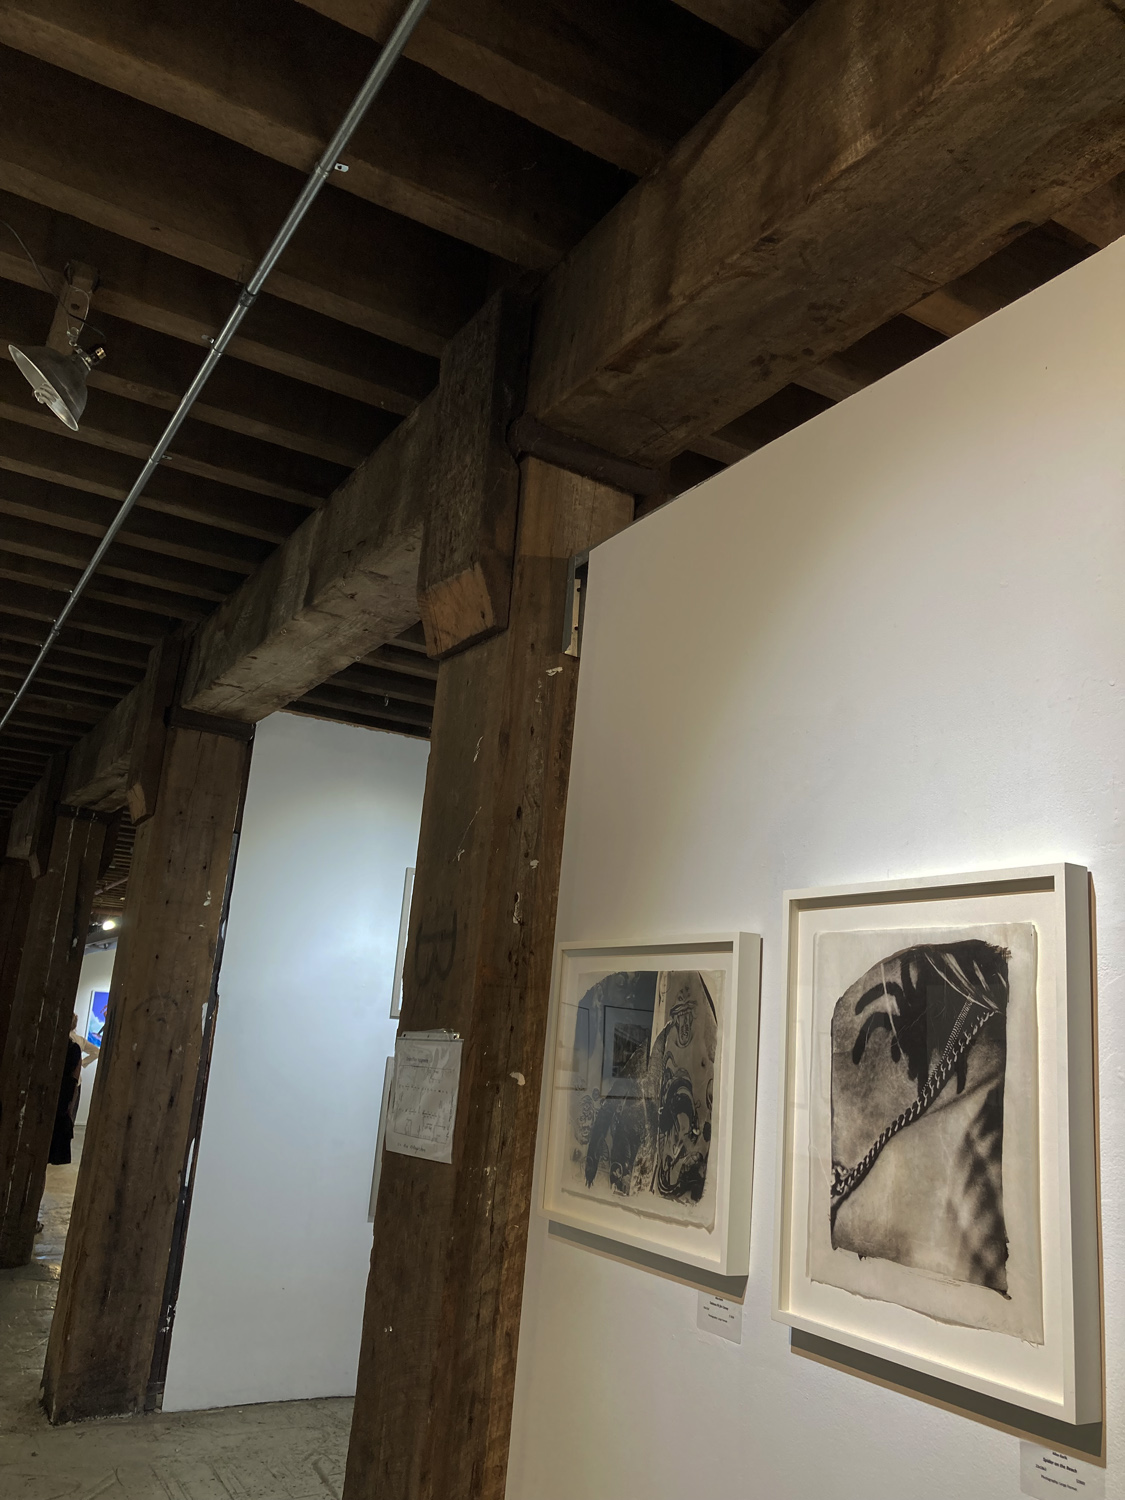 My palladium prints on exhibit at Brooklyn Waterfront Artists Coalition, BWAC.